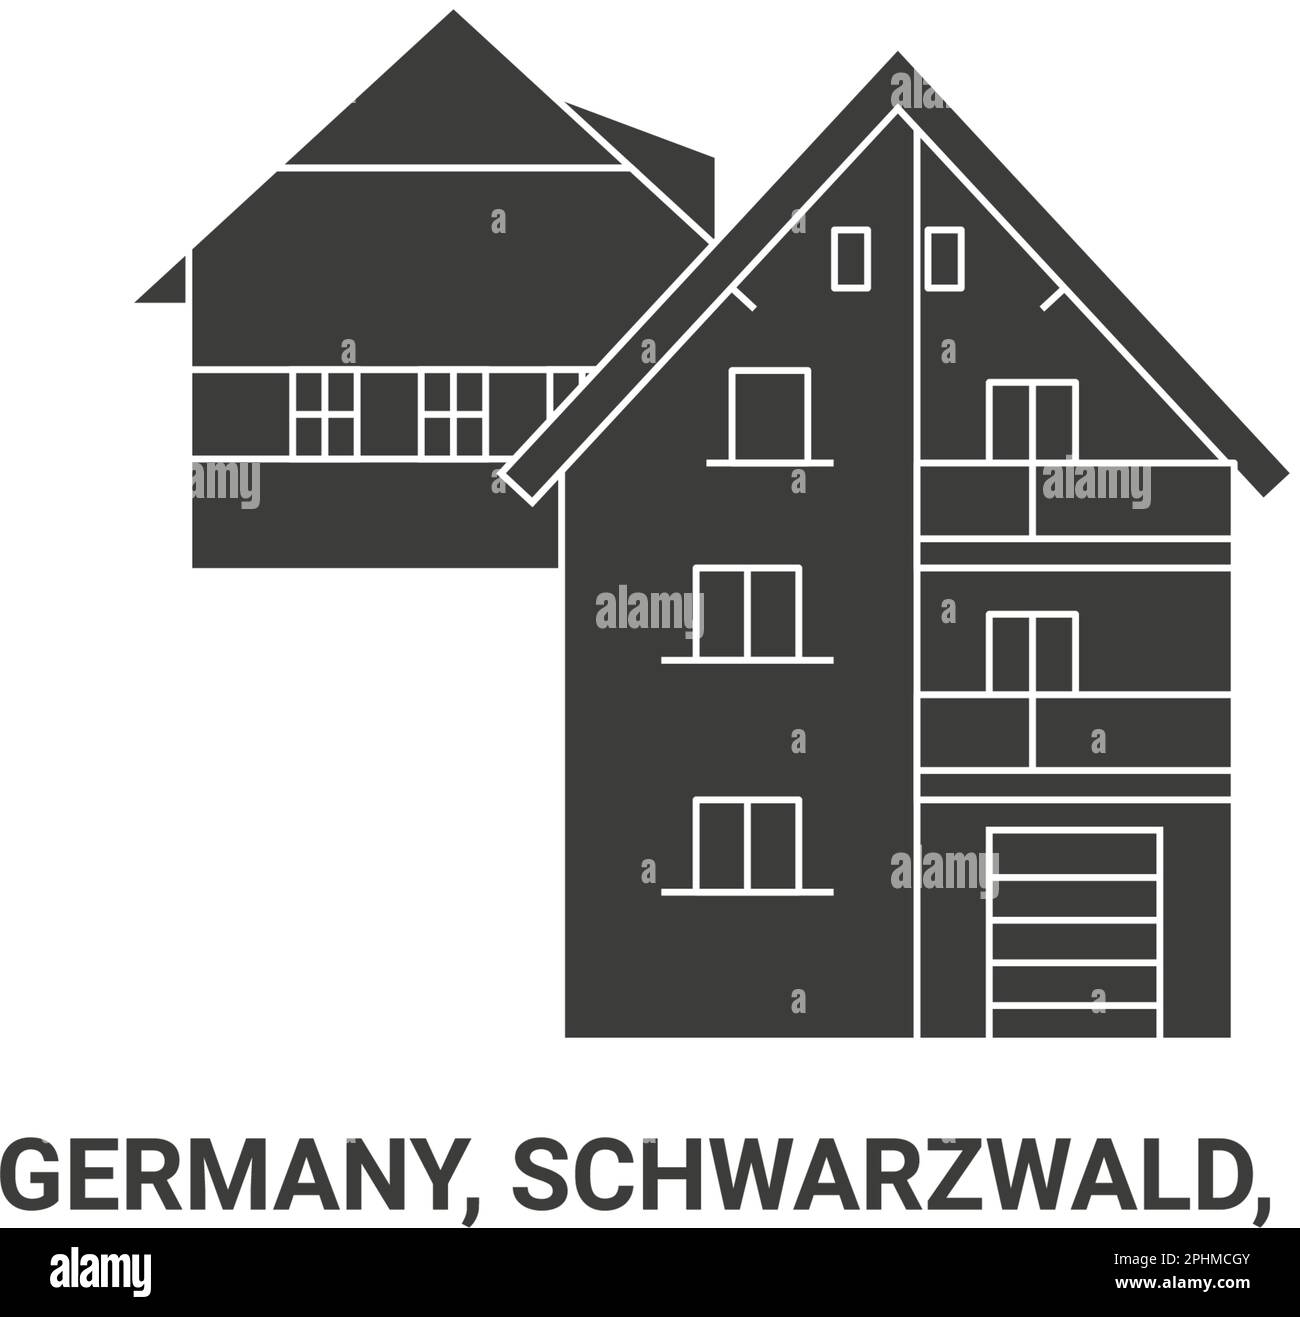 Germany, Schwarzwald travel landmark vector illustration Stock Vector